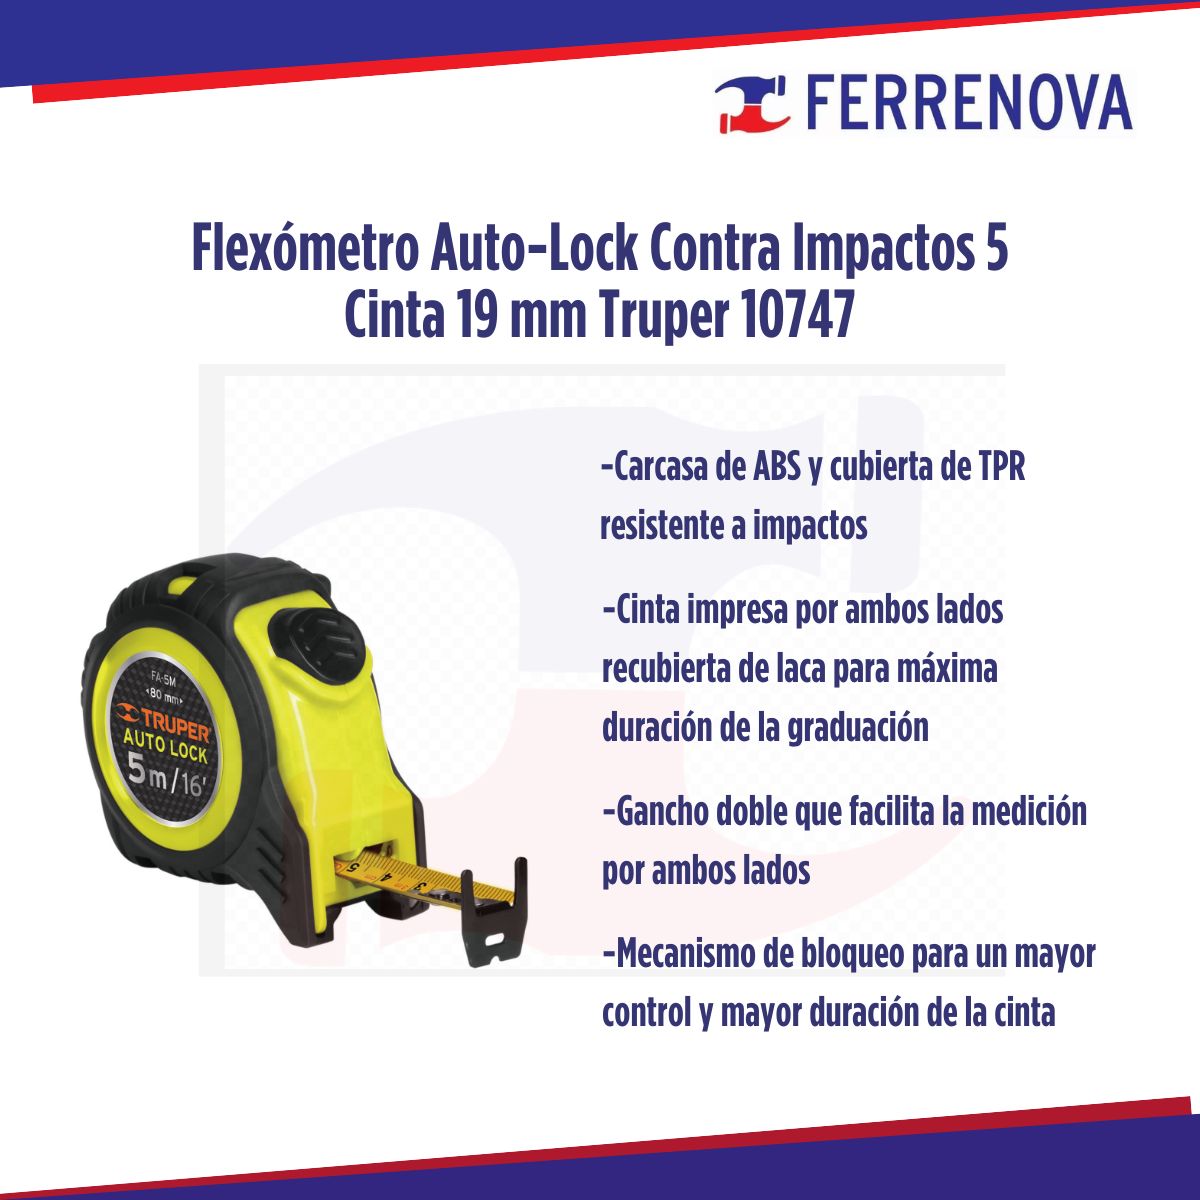 Flexómetro Auto-Lock Contra Impactos 5 Cinta 19 mm Truper 10747